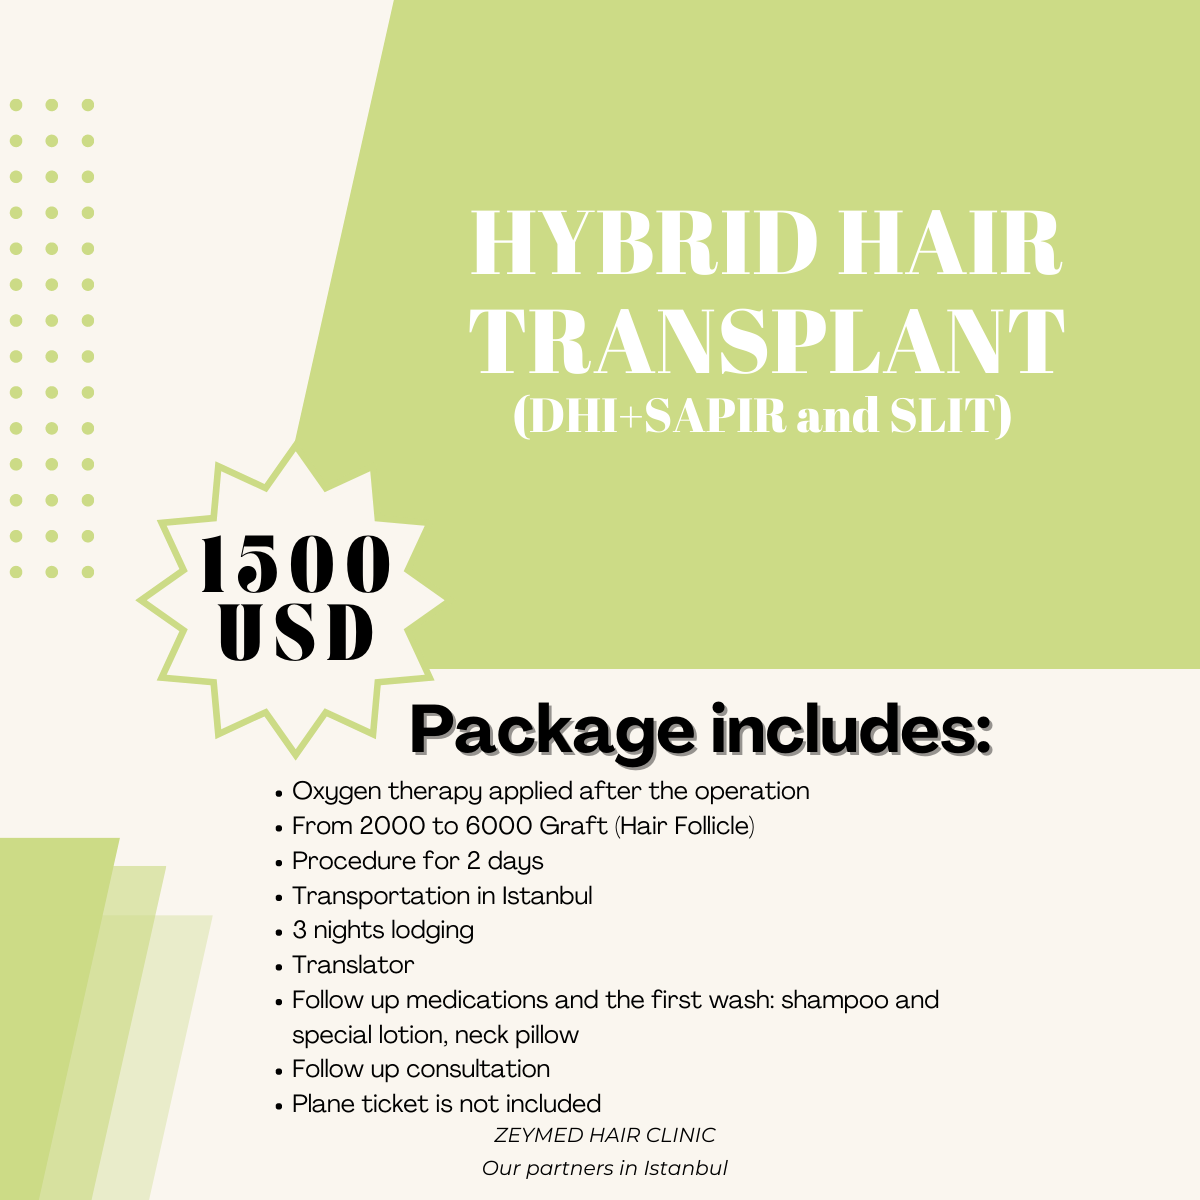 HYBRID HAIR TRANSPLANT